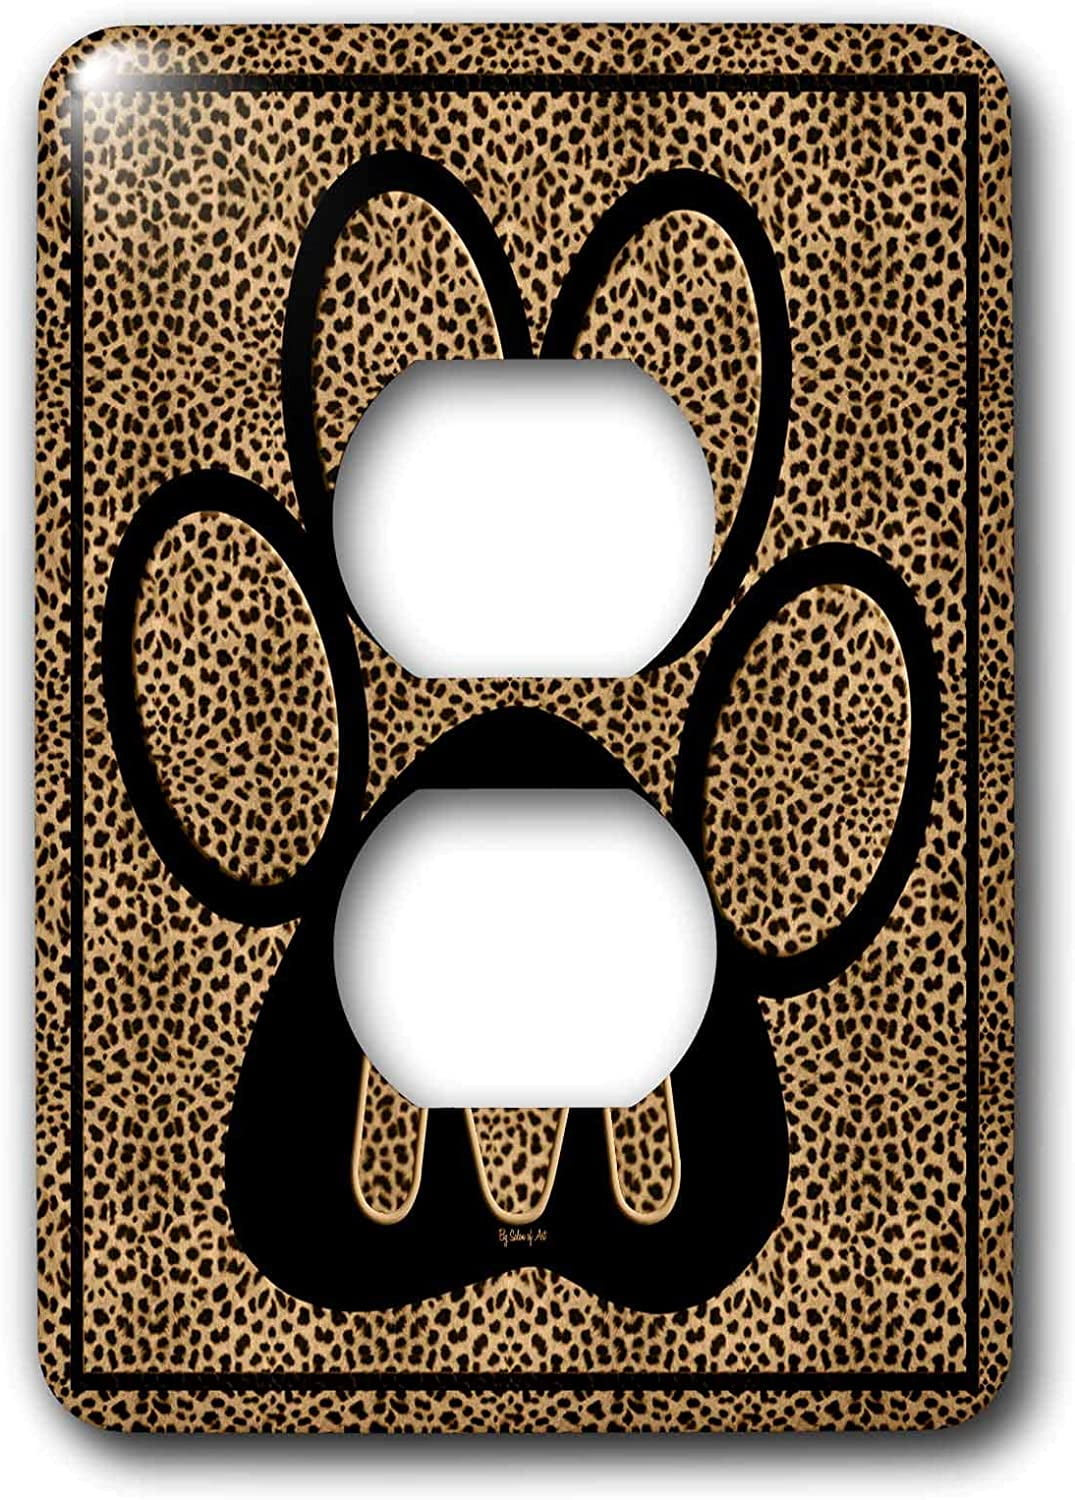 lsp_25946_6 Letter M Standard Cheetah Print Paw Outlet Cover, - Walmart.com -